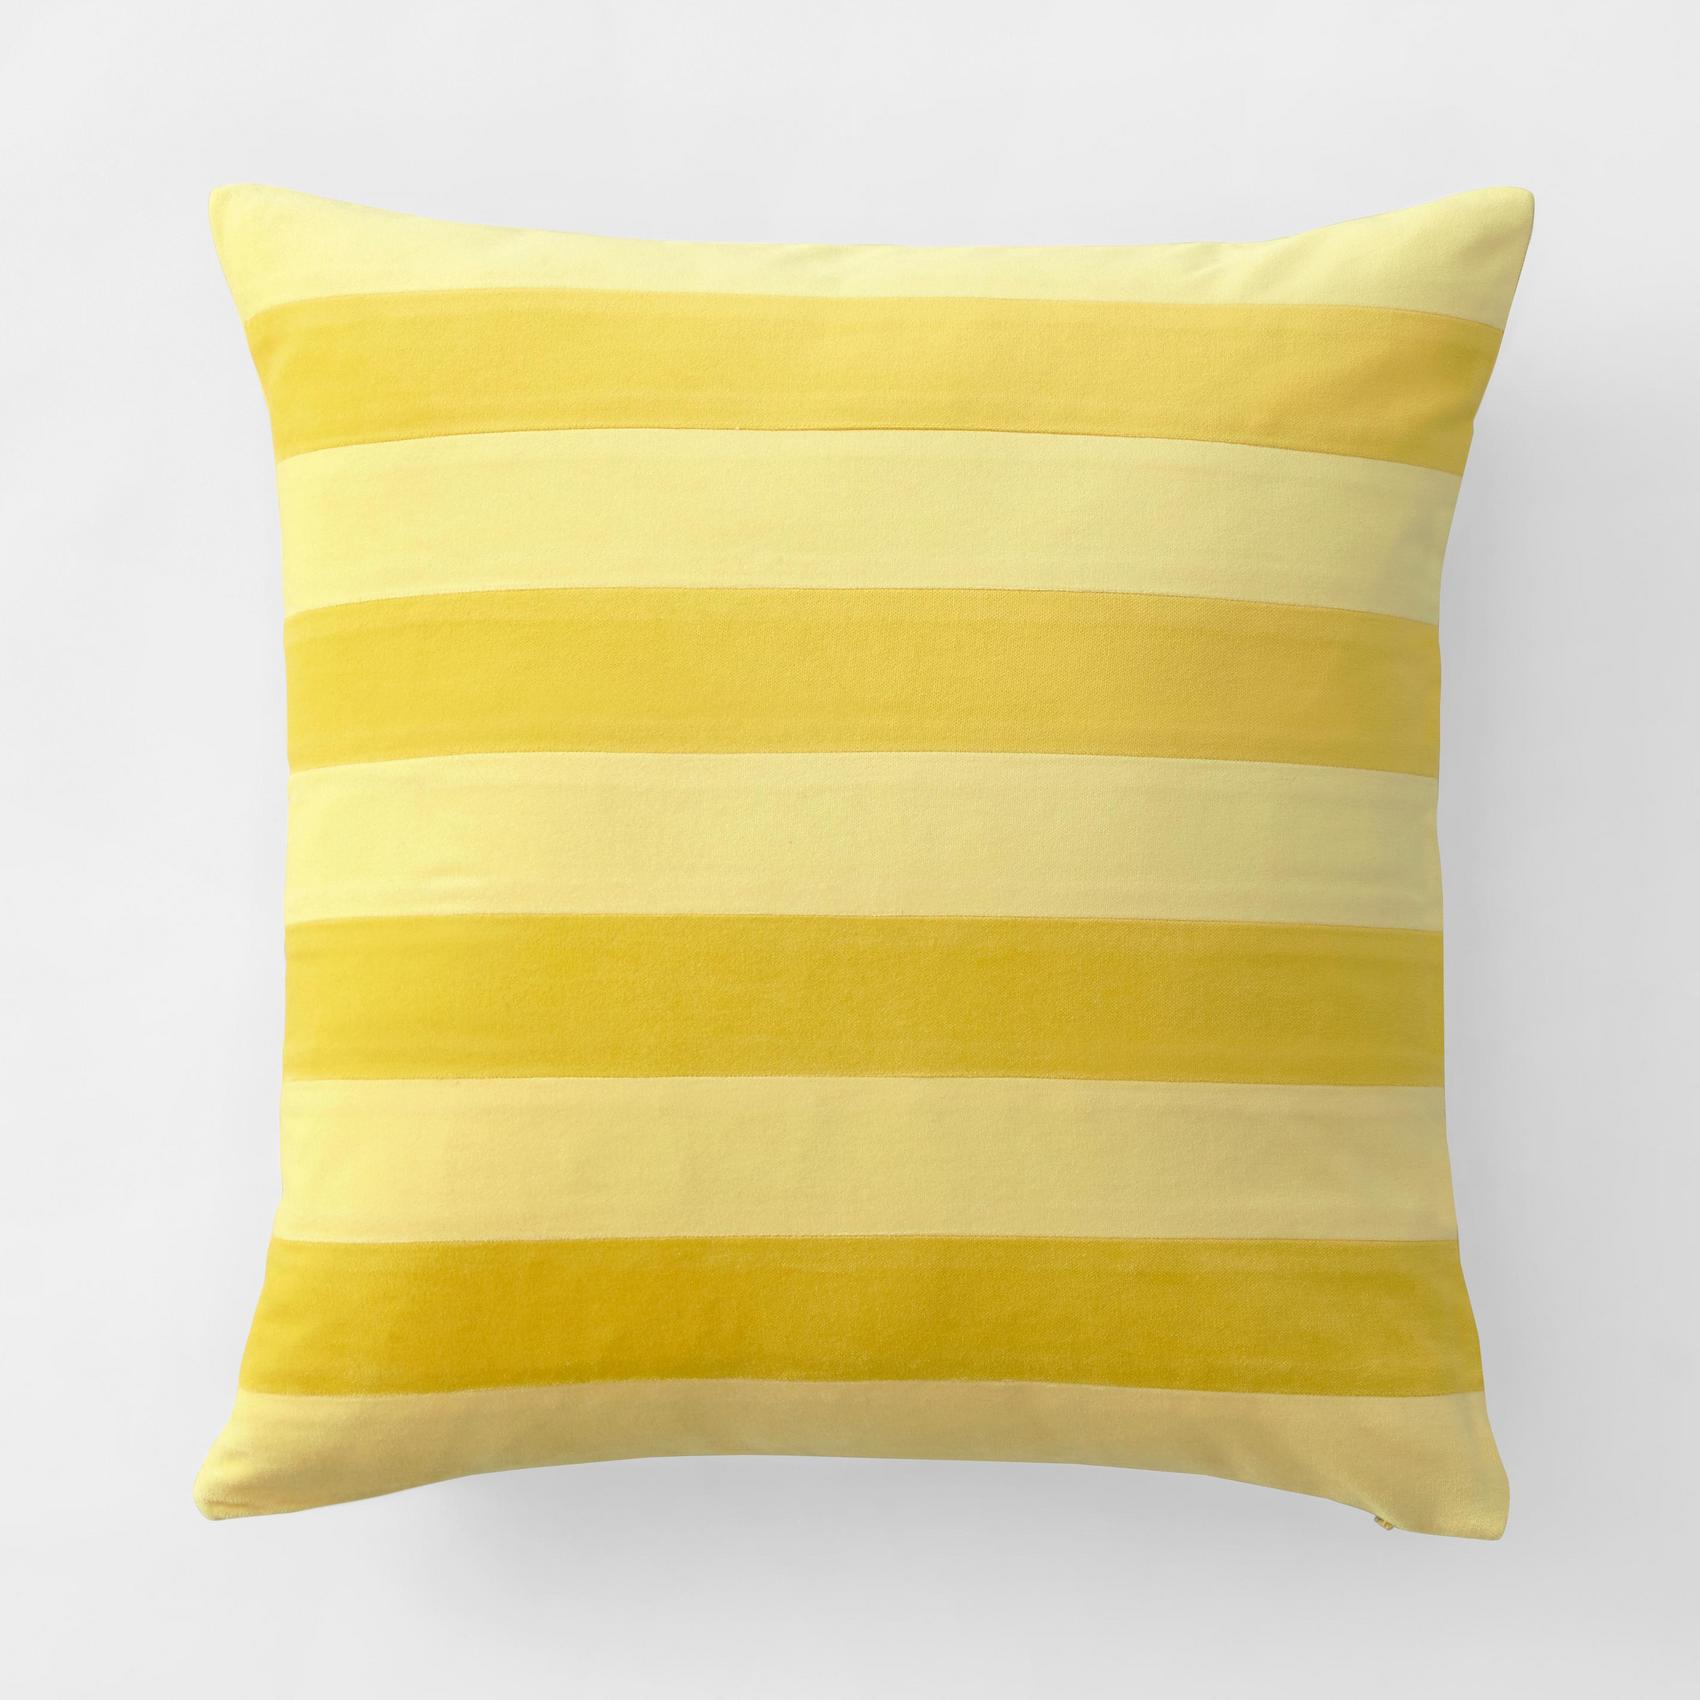 Sheridan Kolsby Square Cushion in Citronelle Size: 45cm x 45cm @Sheridan Rewards